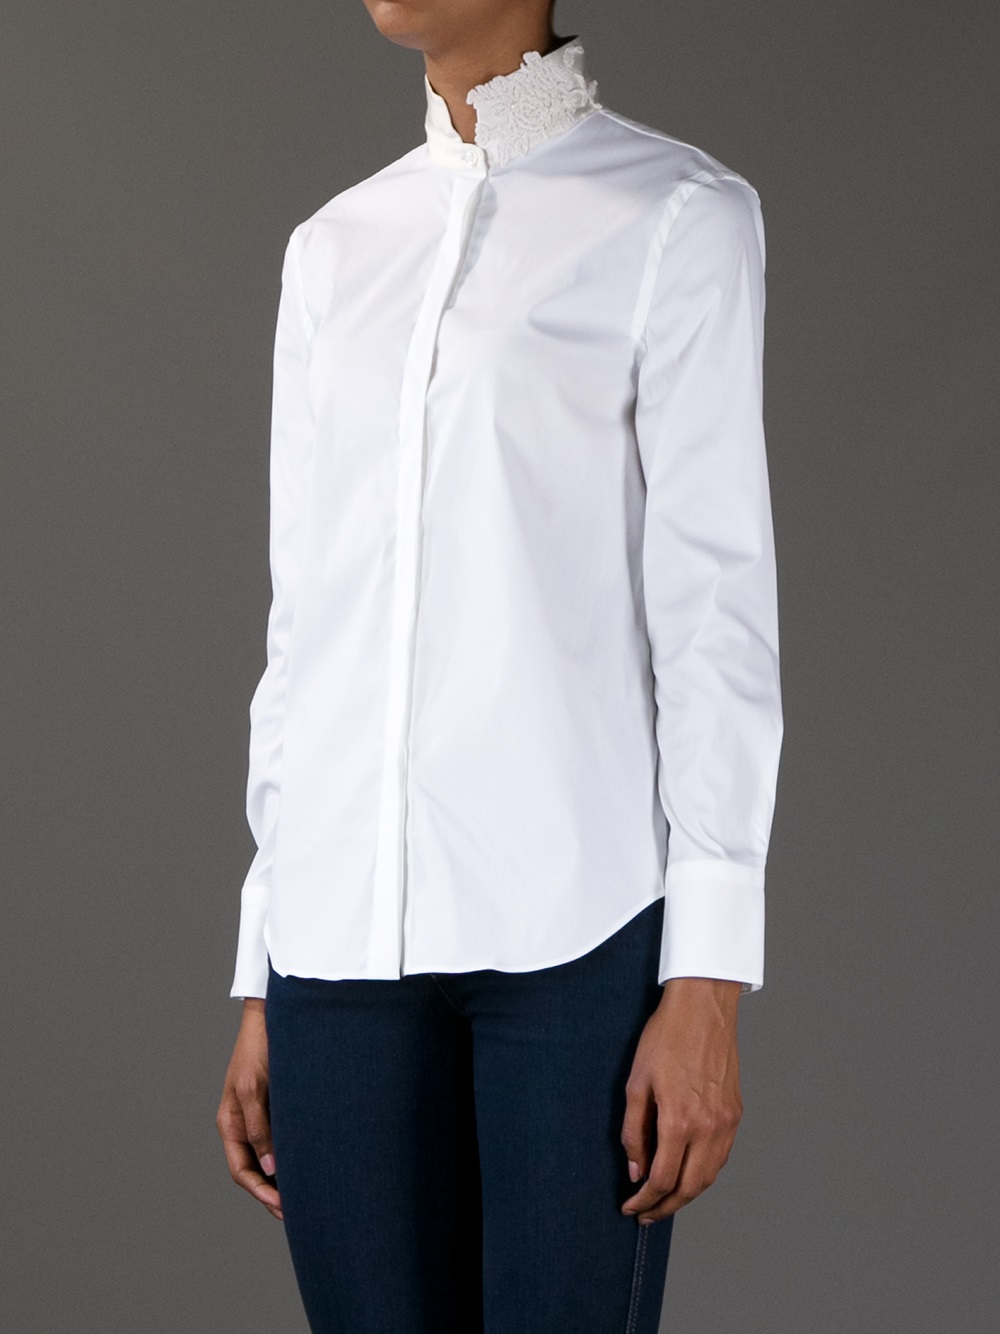 Brunello Cucinelli Standup Collar Blouse in White - Lyst